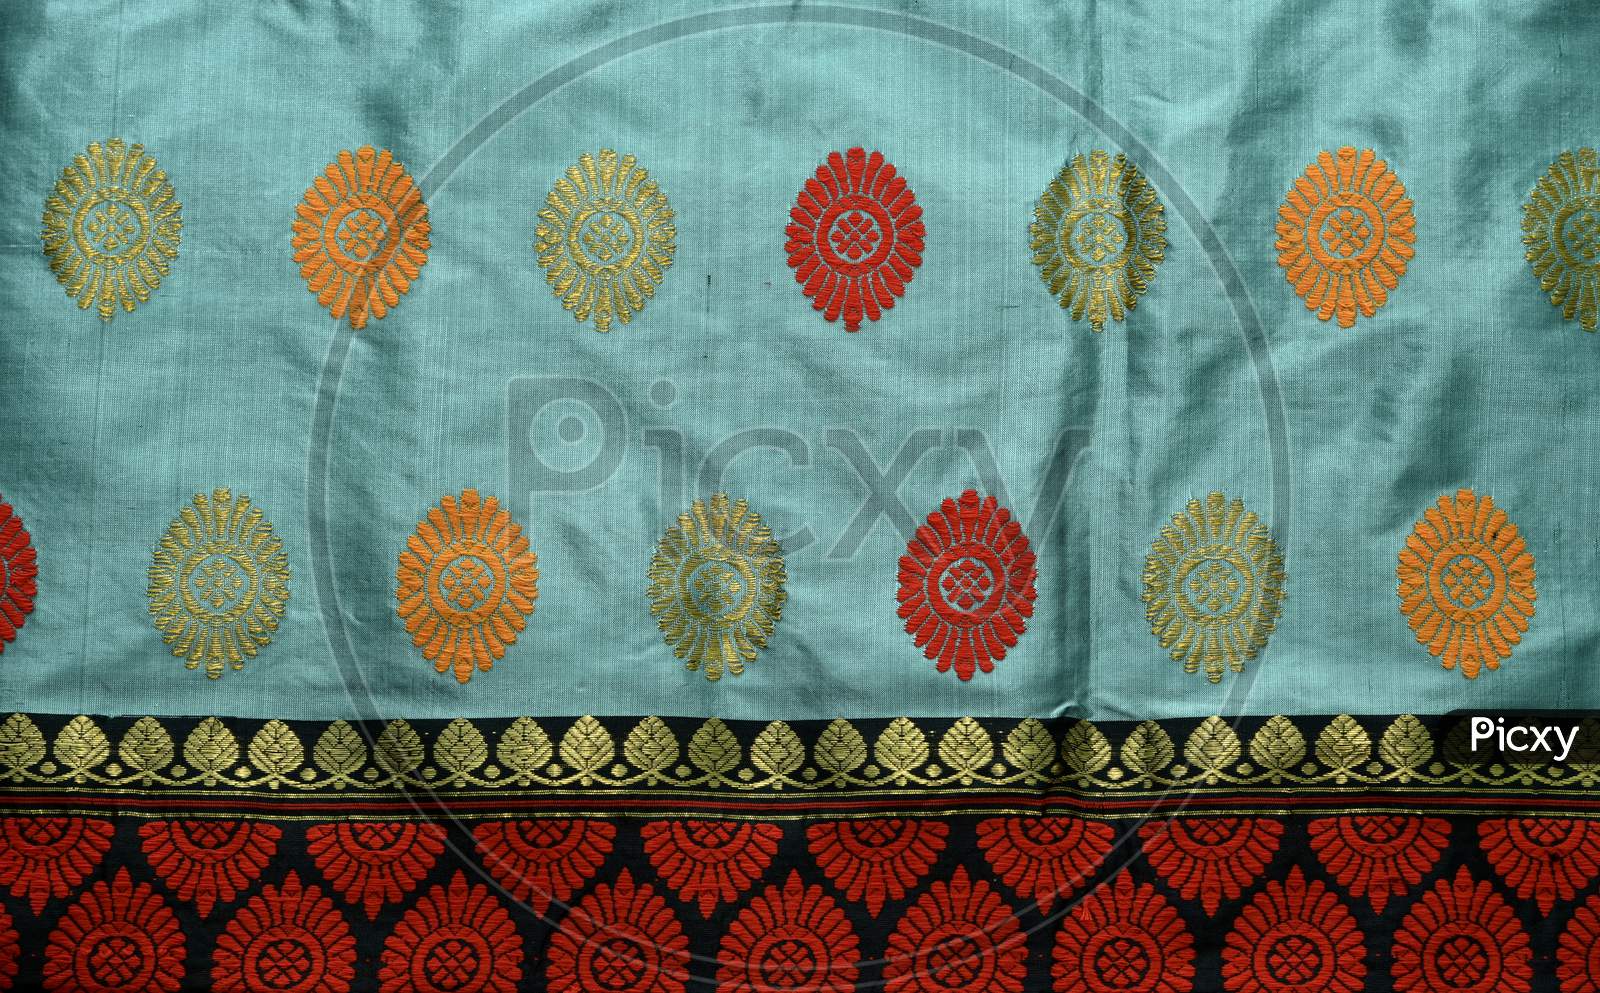 Handmade Handloom Sarees With Elegant Designs At Weavers Stores in Guwahati